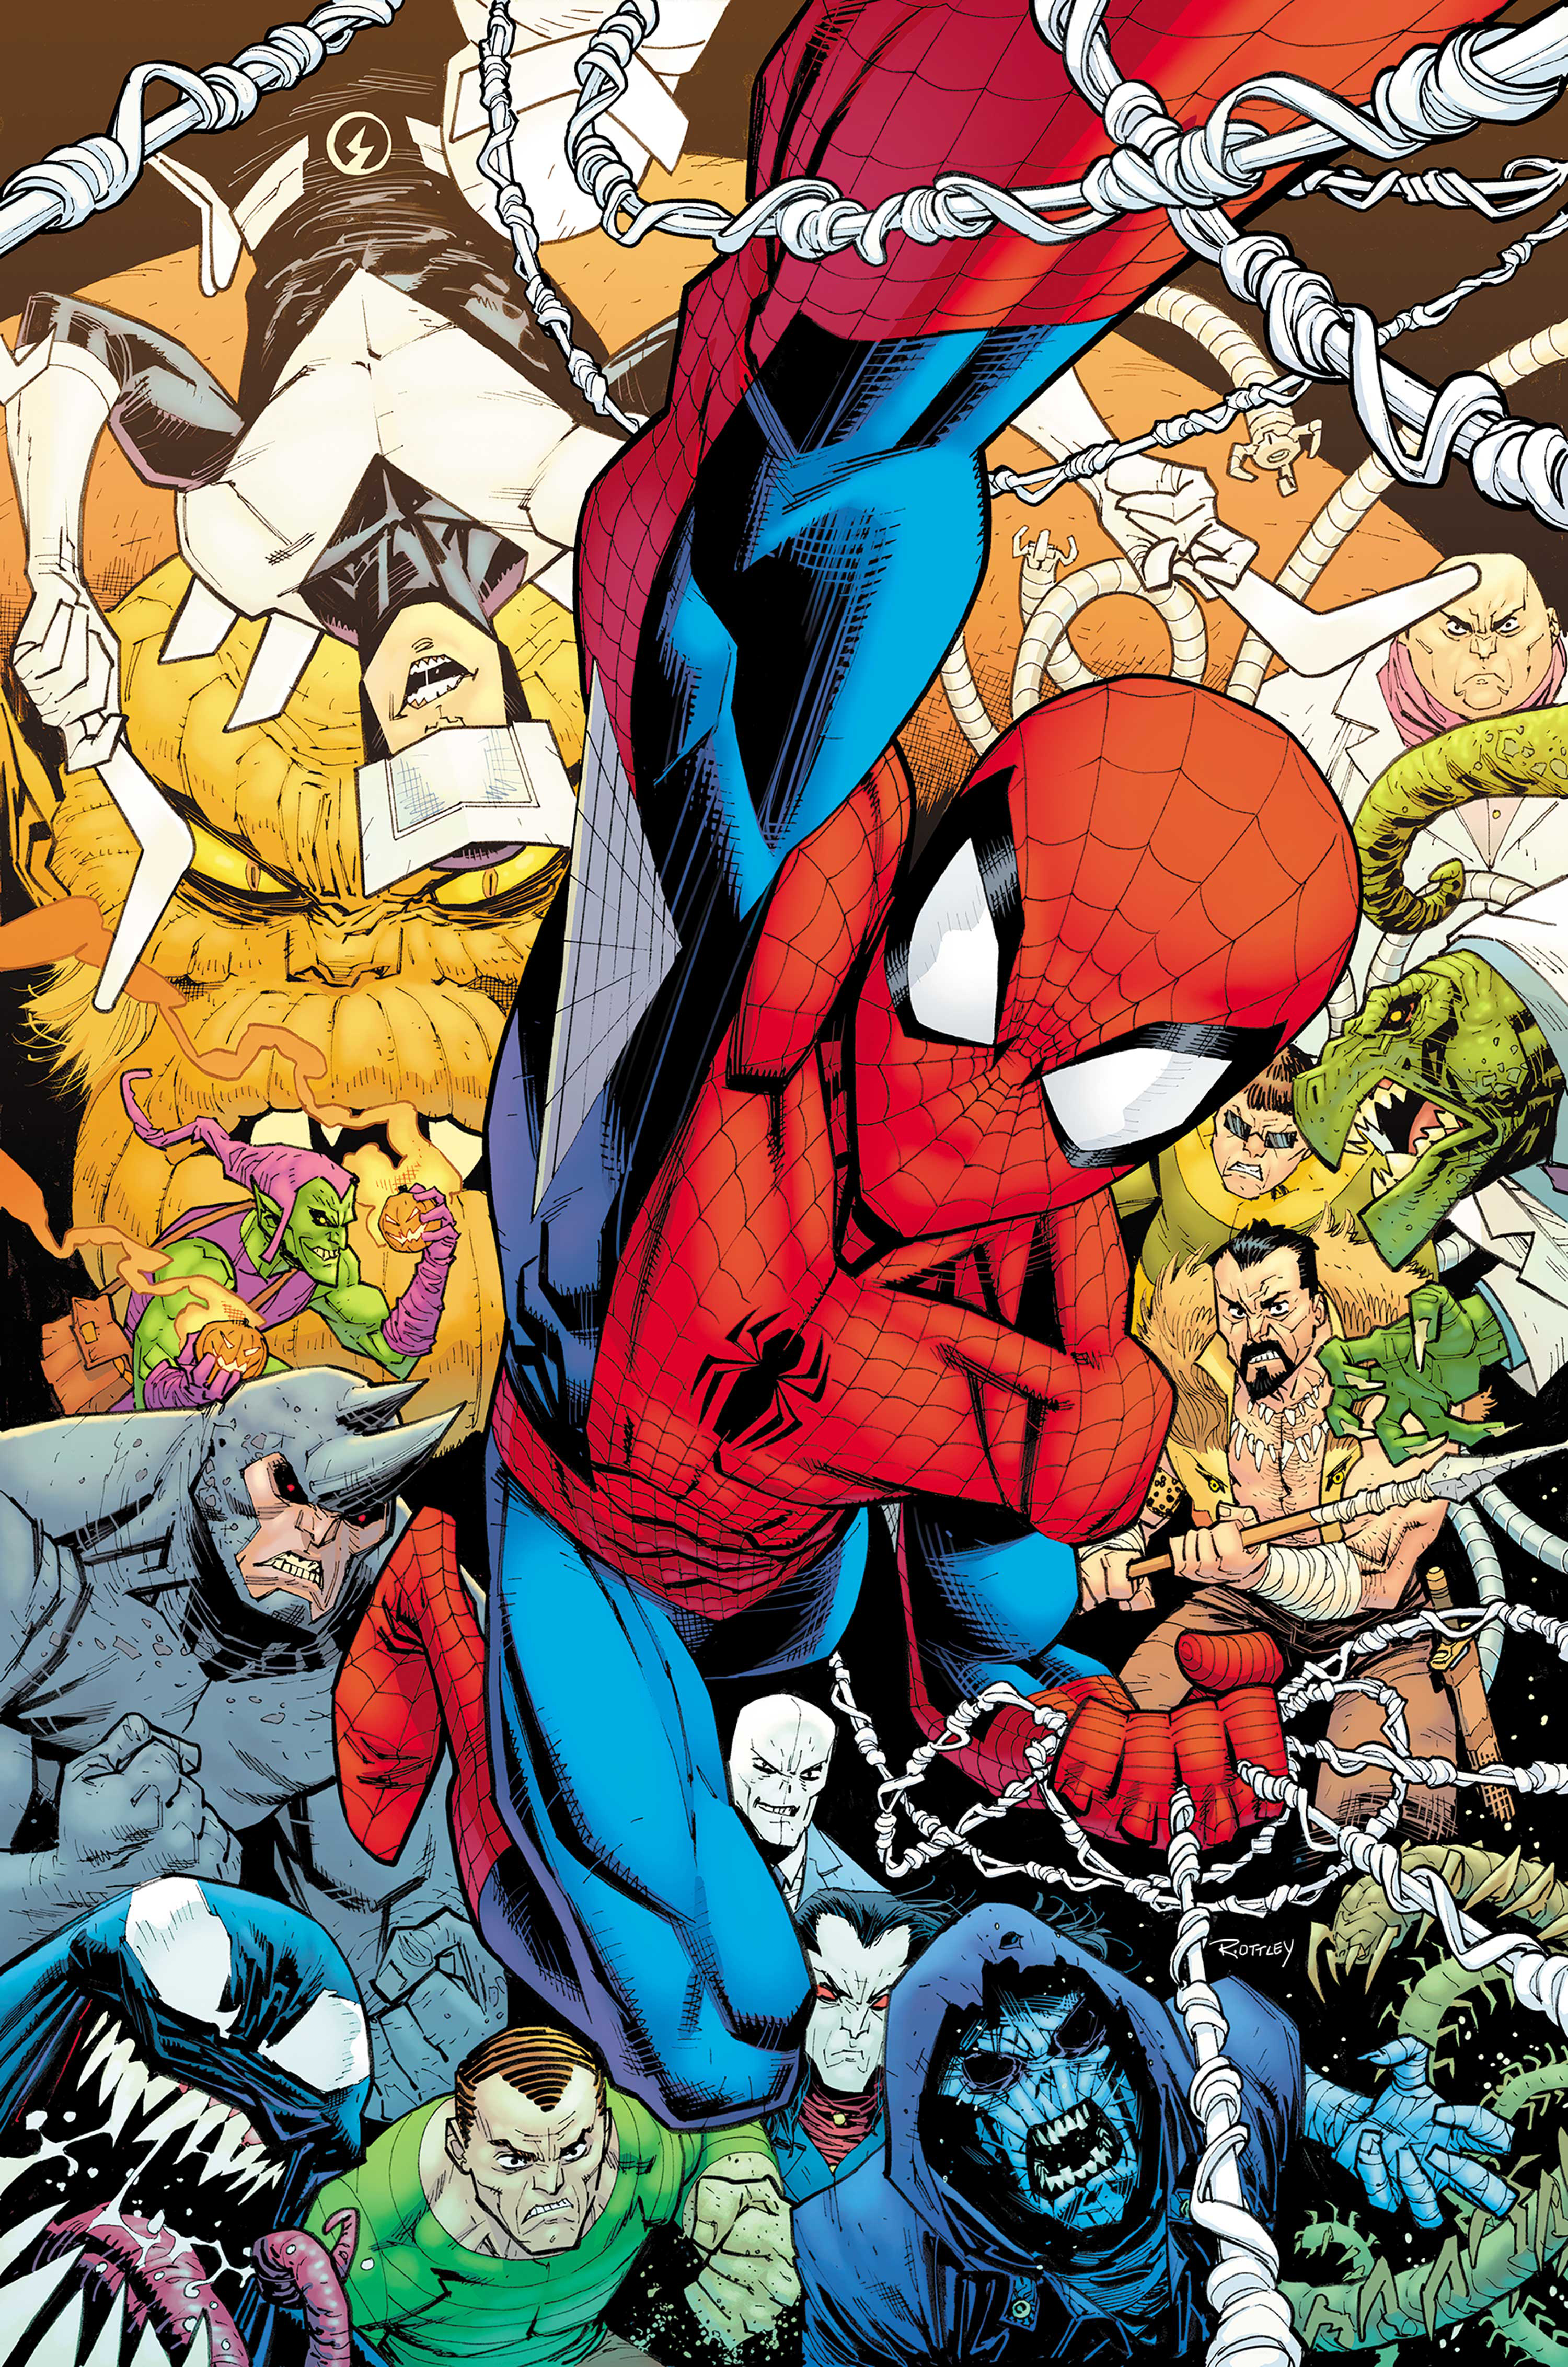 Amazing Spider-Man #850 by Ryan Ottley Poster